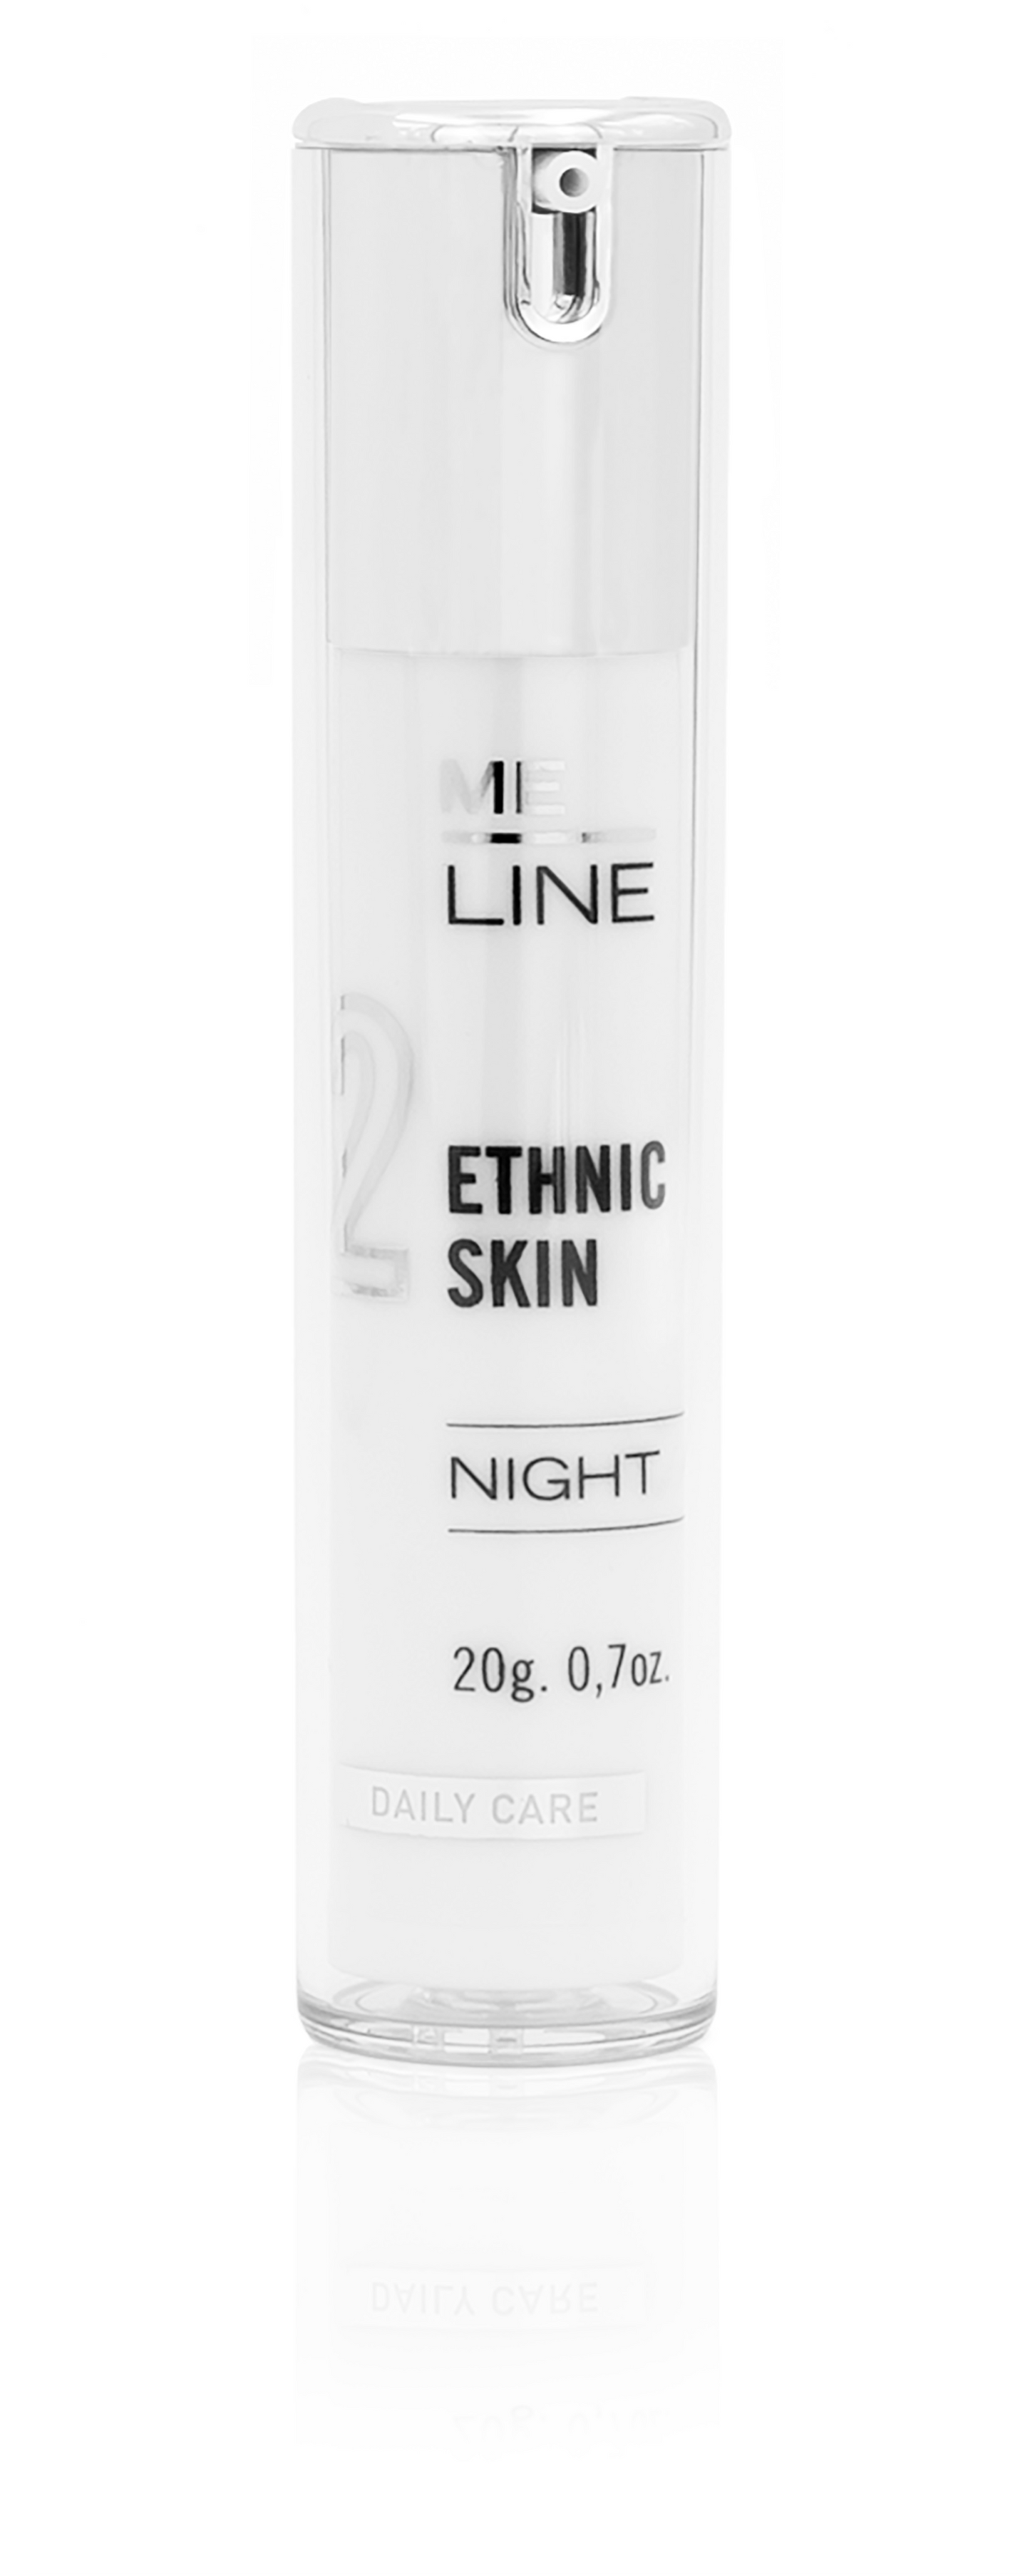 02 Meline Ethnic Skin Night